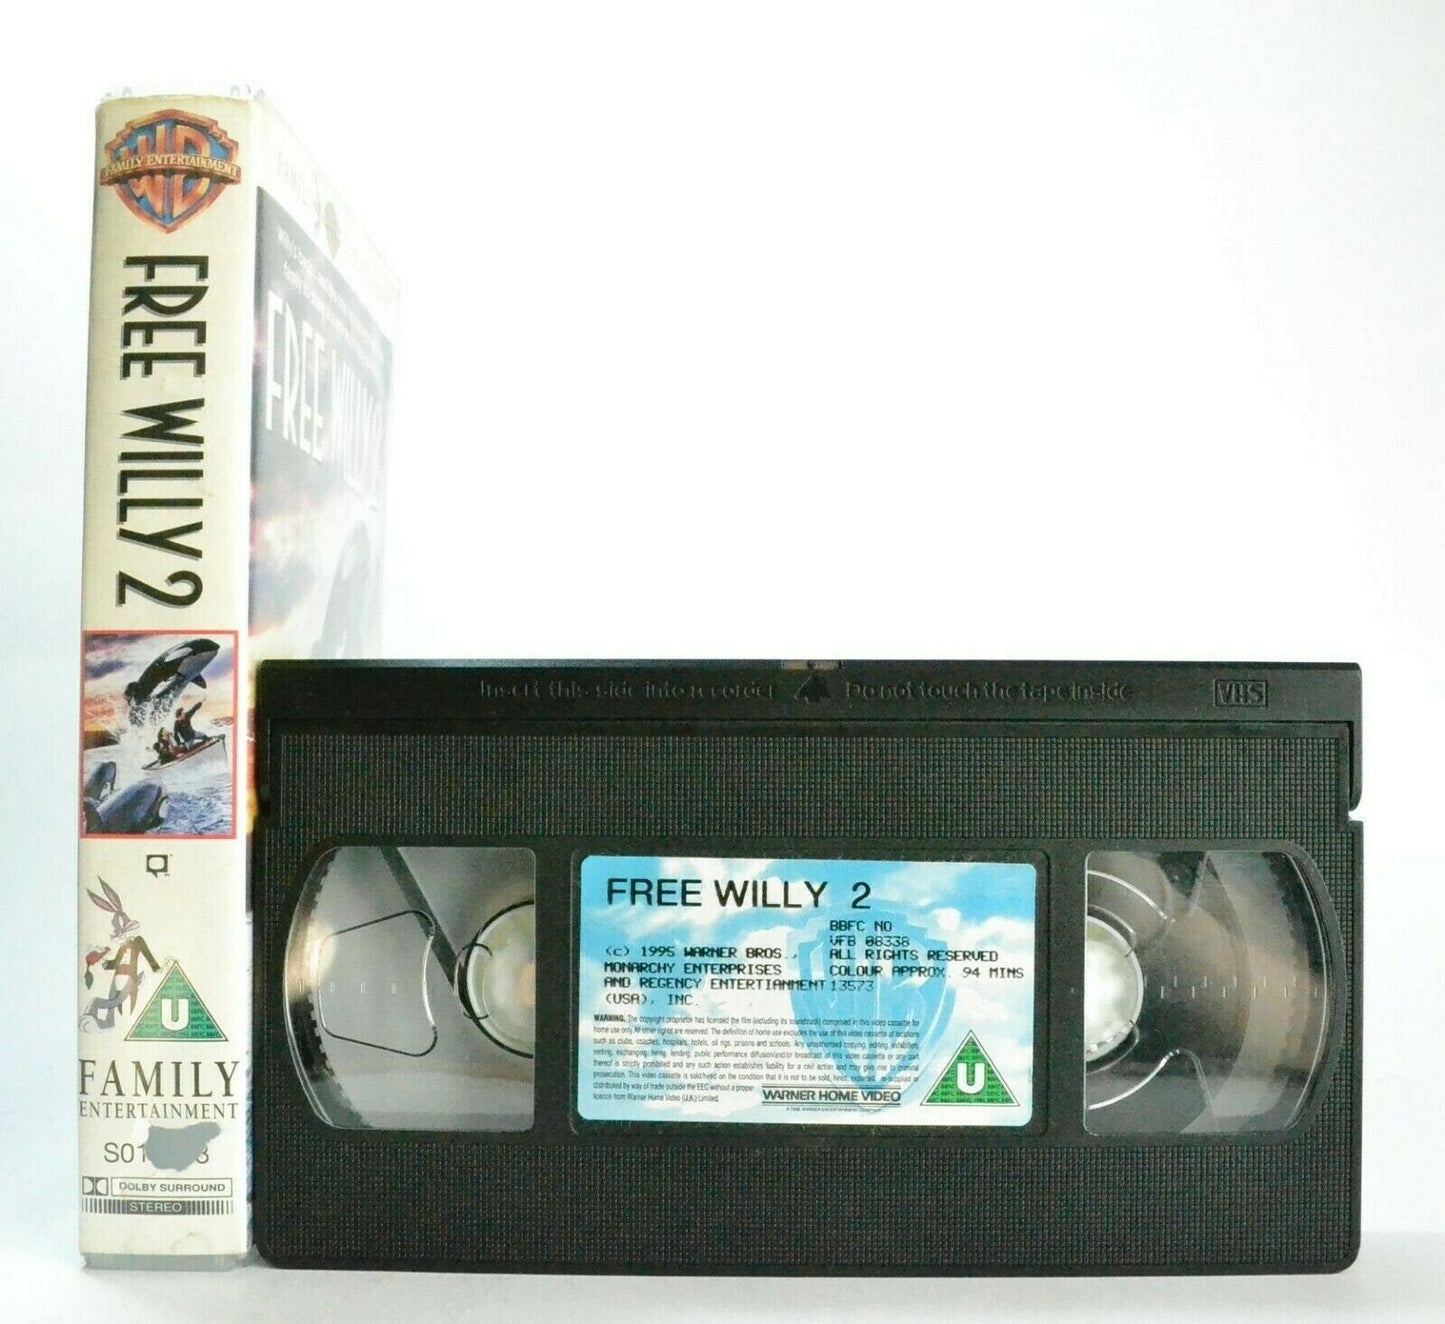 Free Willy 2: Warner (1995) - Family Film - Thrill Adveture - Children's - VHS-